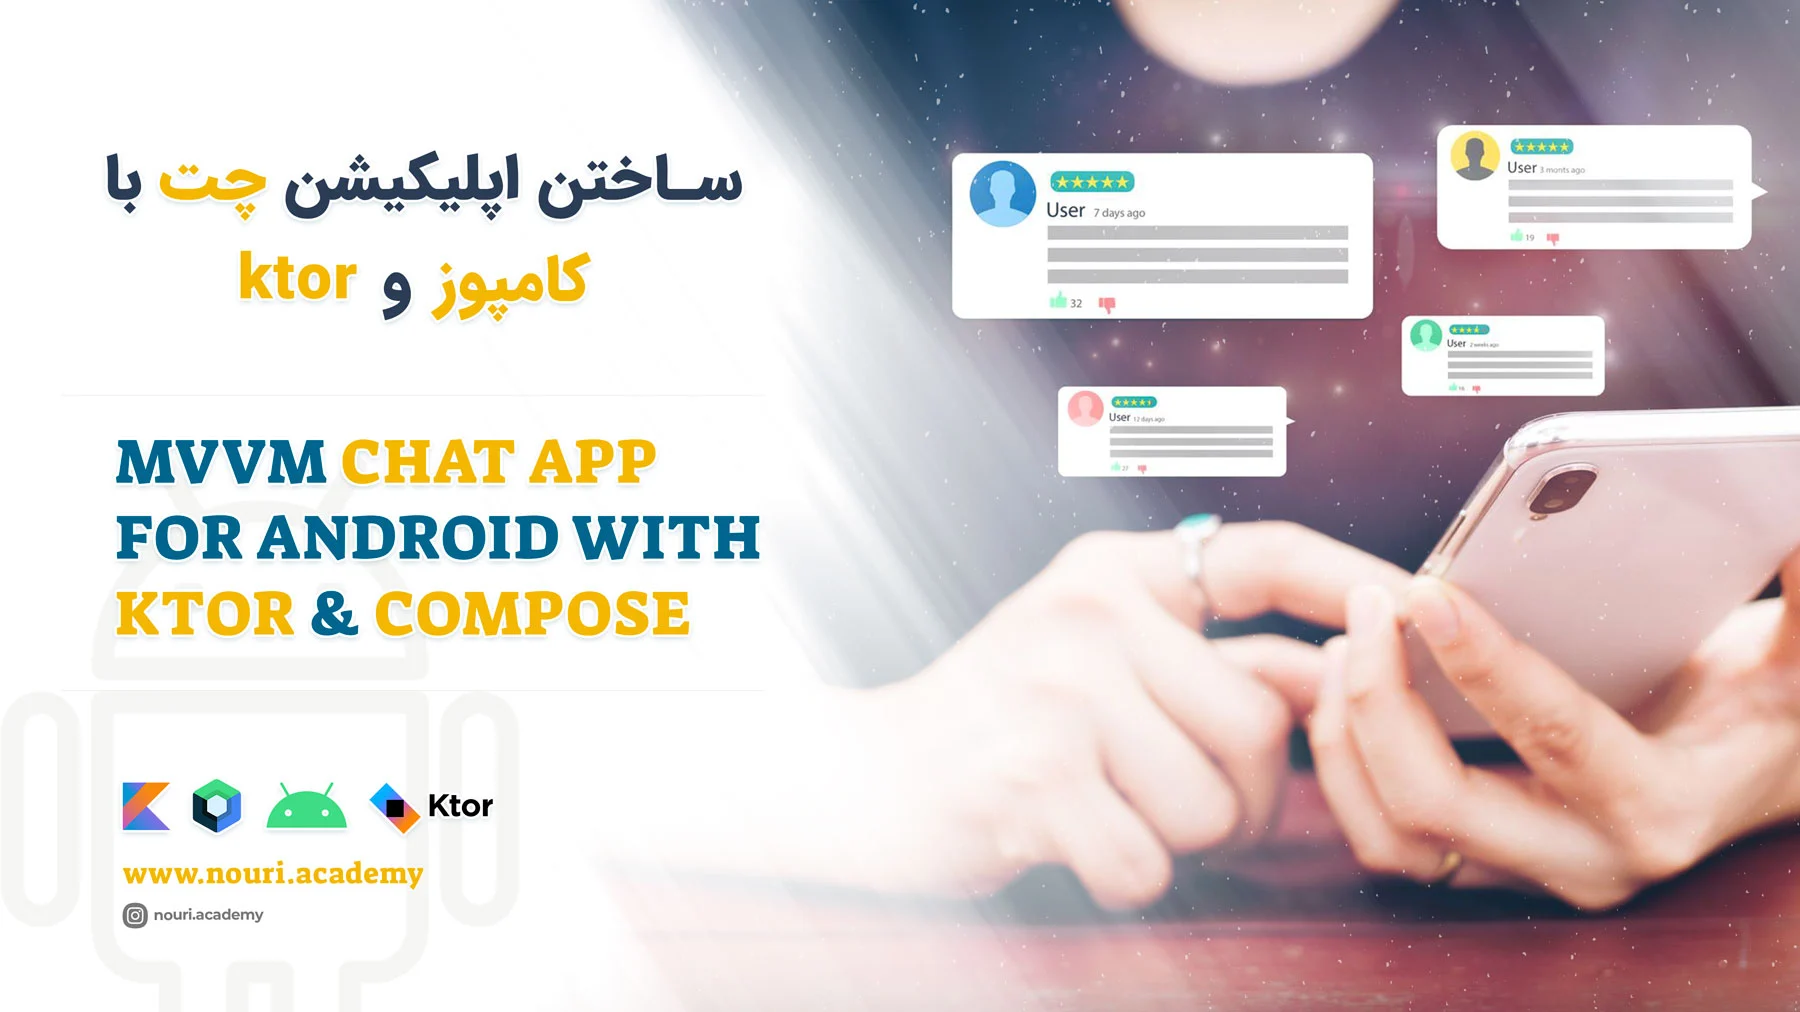 آموزش اپلیکیشن چت کامپوزی با Android Chat App with Ktor Compose MVVM